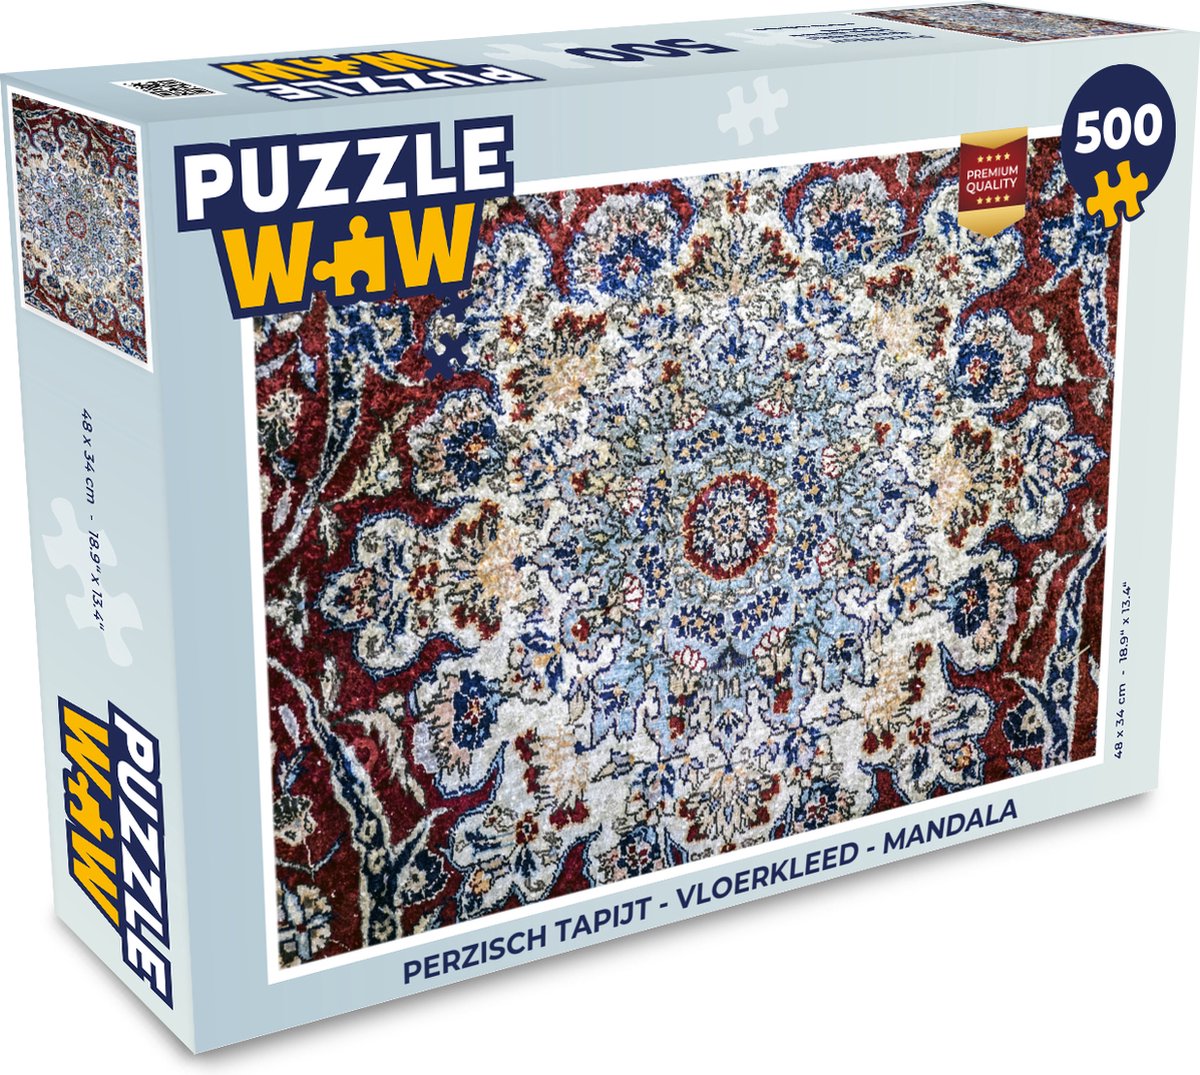 Afbeelding van product PuzzleWow  Puzzel Perzisch Tapijt - Vloerkleed - Mandala - Legpuzzel - Puzzel 500 stukjes